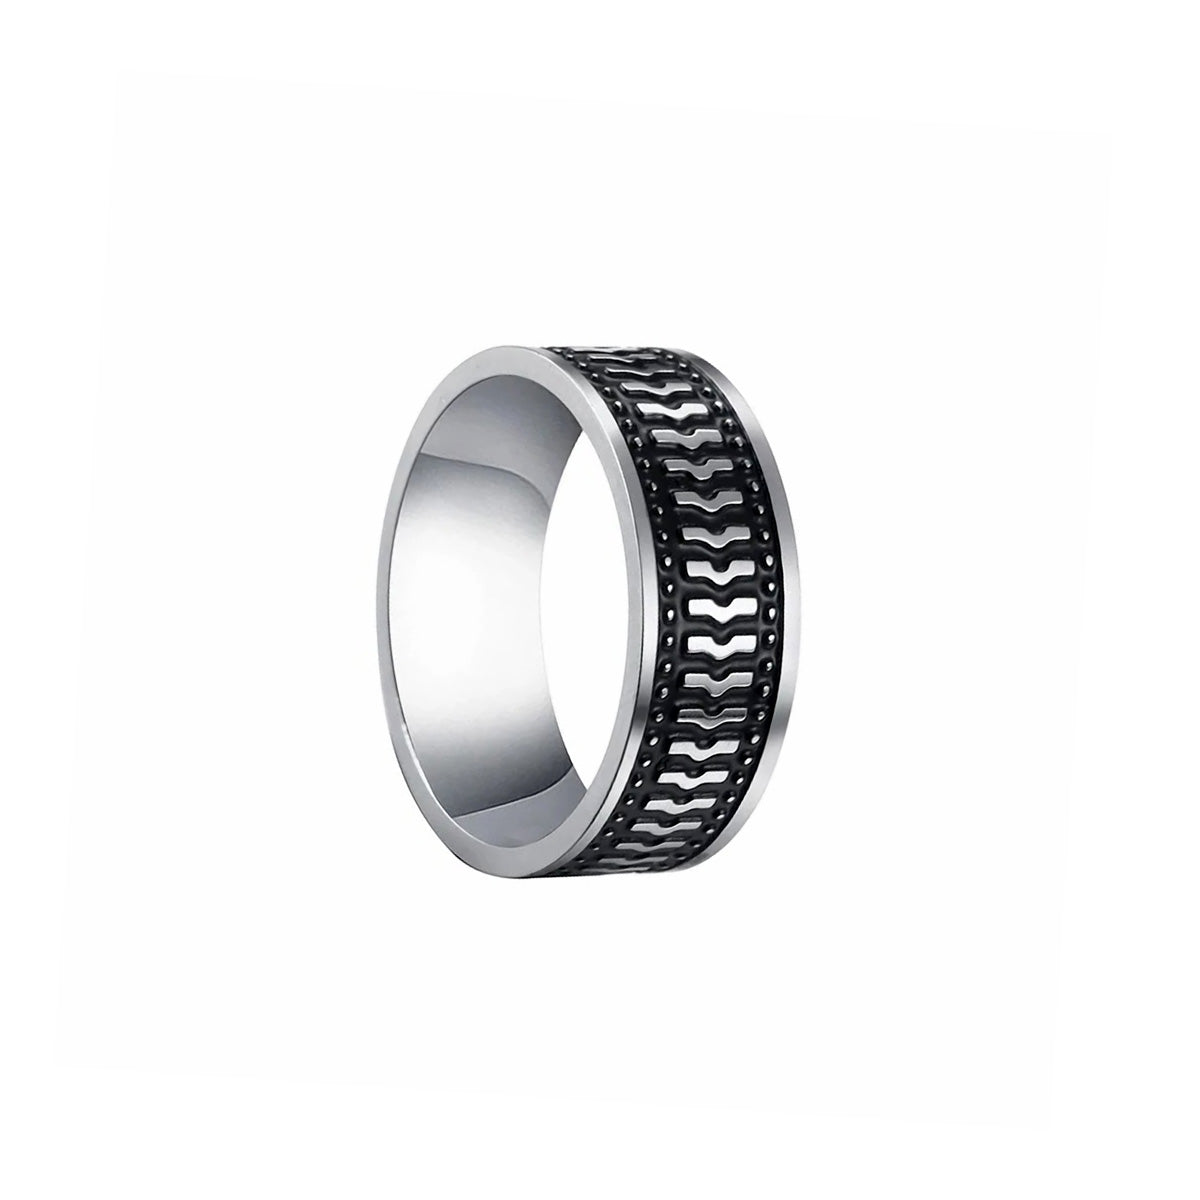 Stripe patterned shiny steel ring 8mm